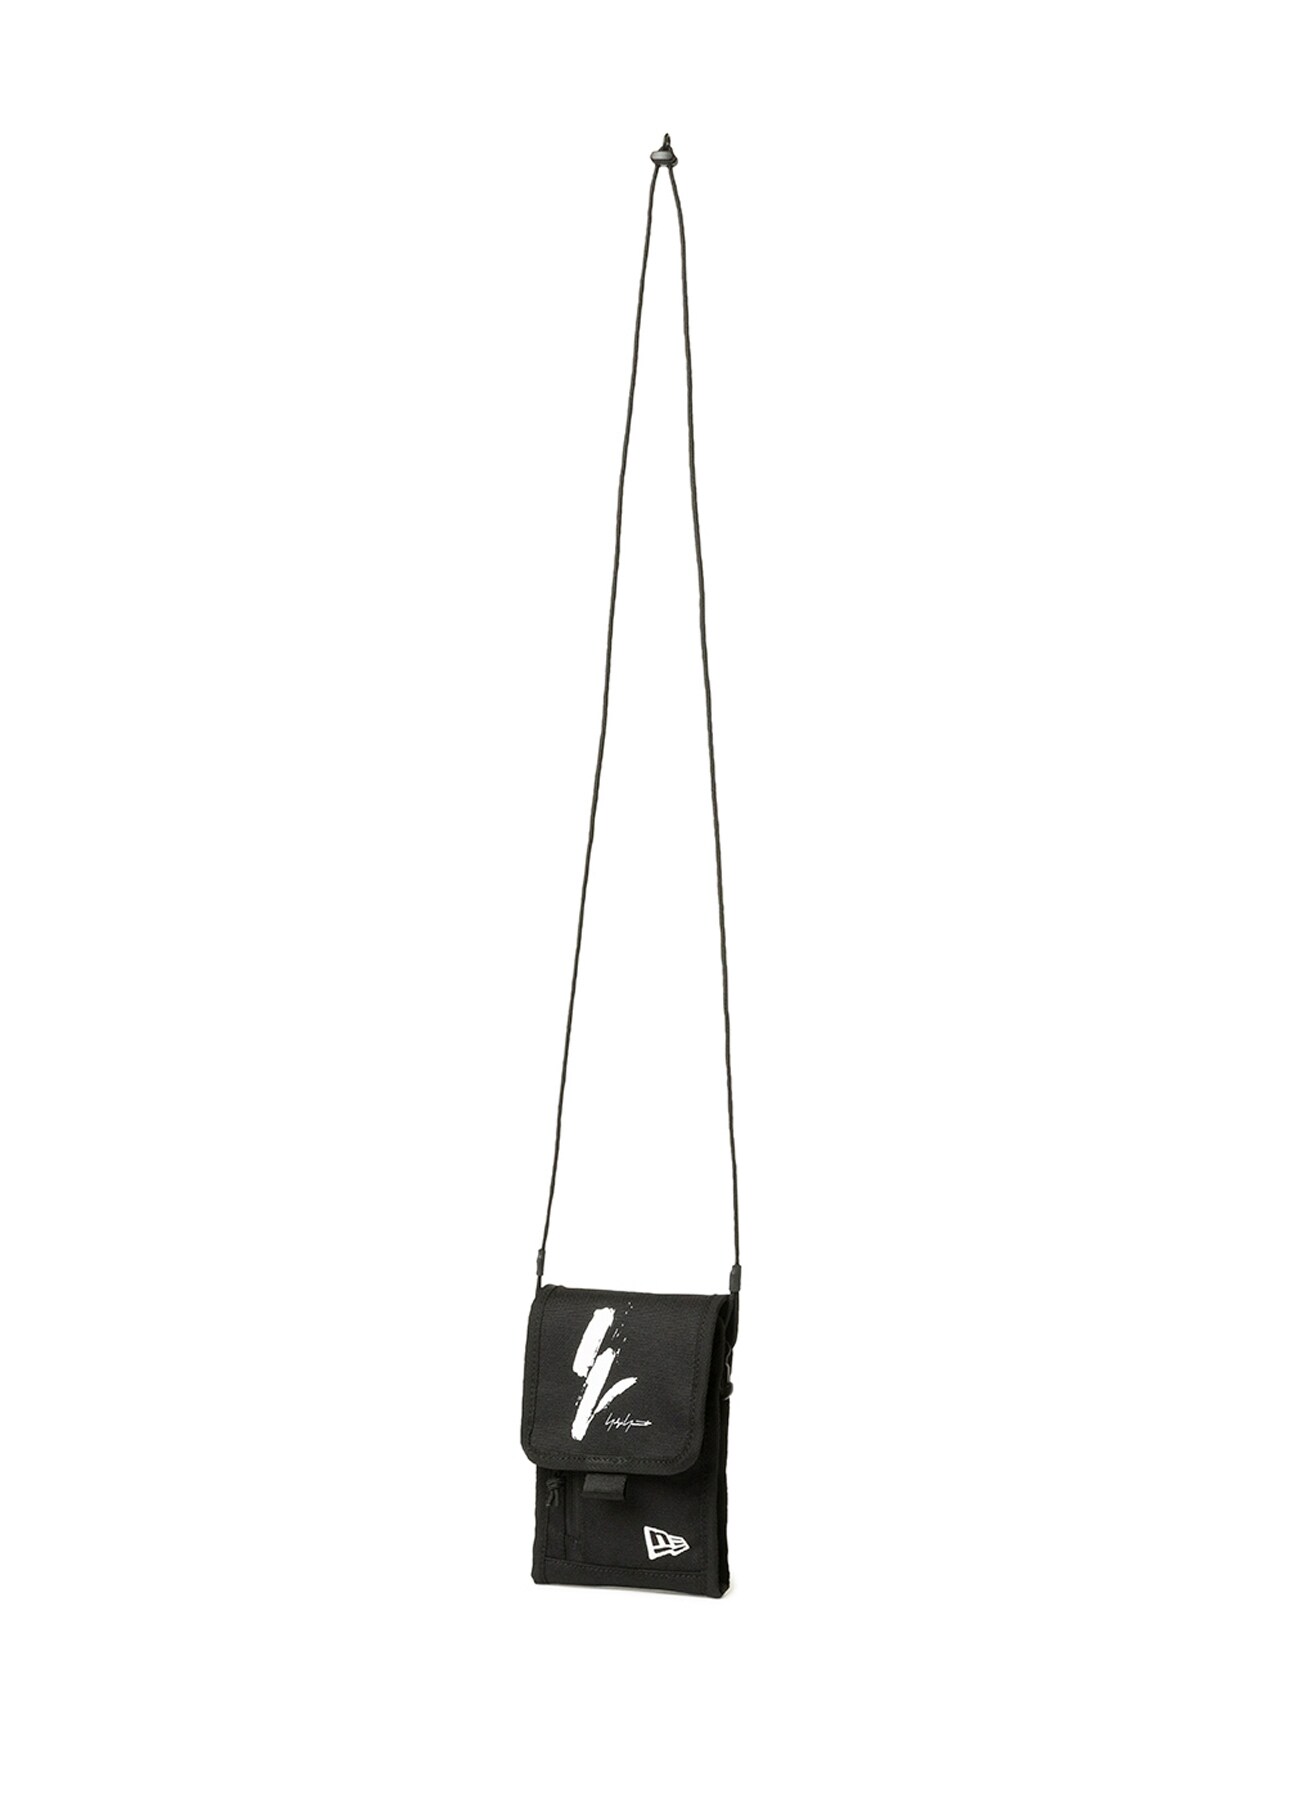 DRUM LEATHER FLAP SHOULDER BAG(FREE SIZE Black): Yohji Yamamoto